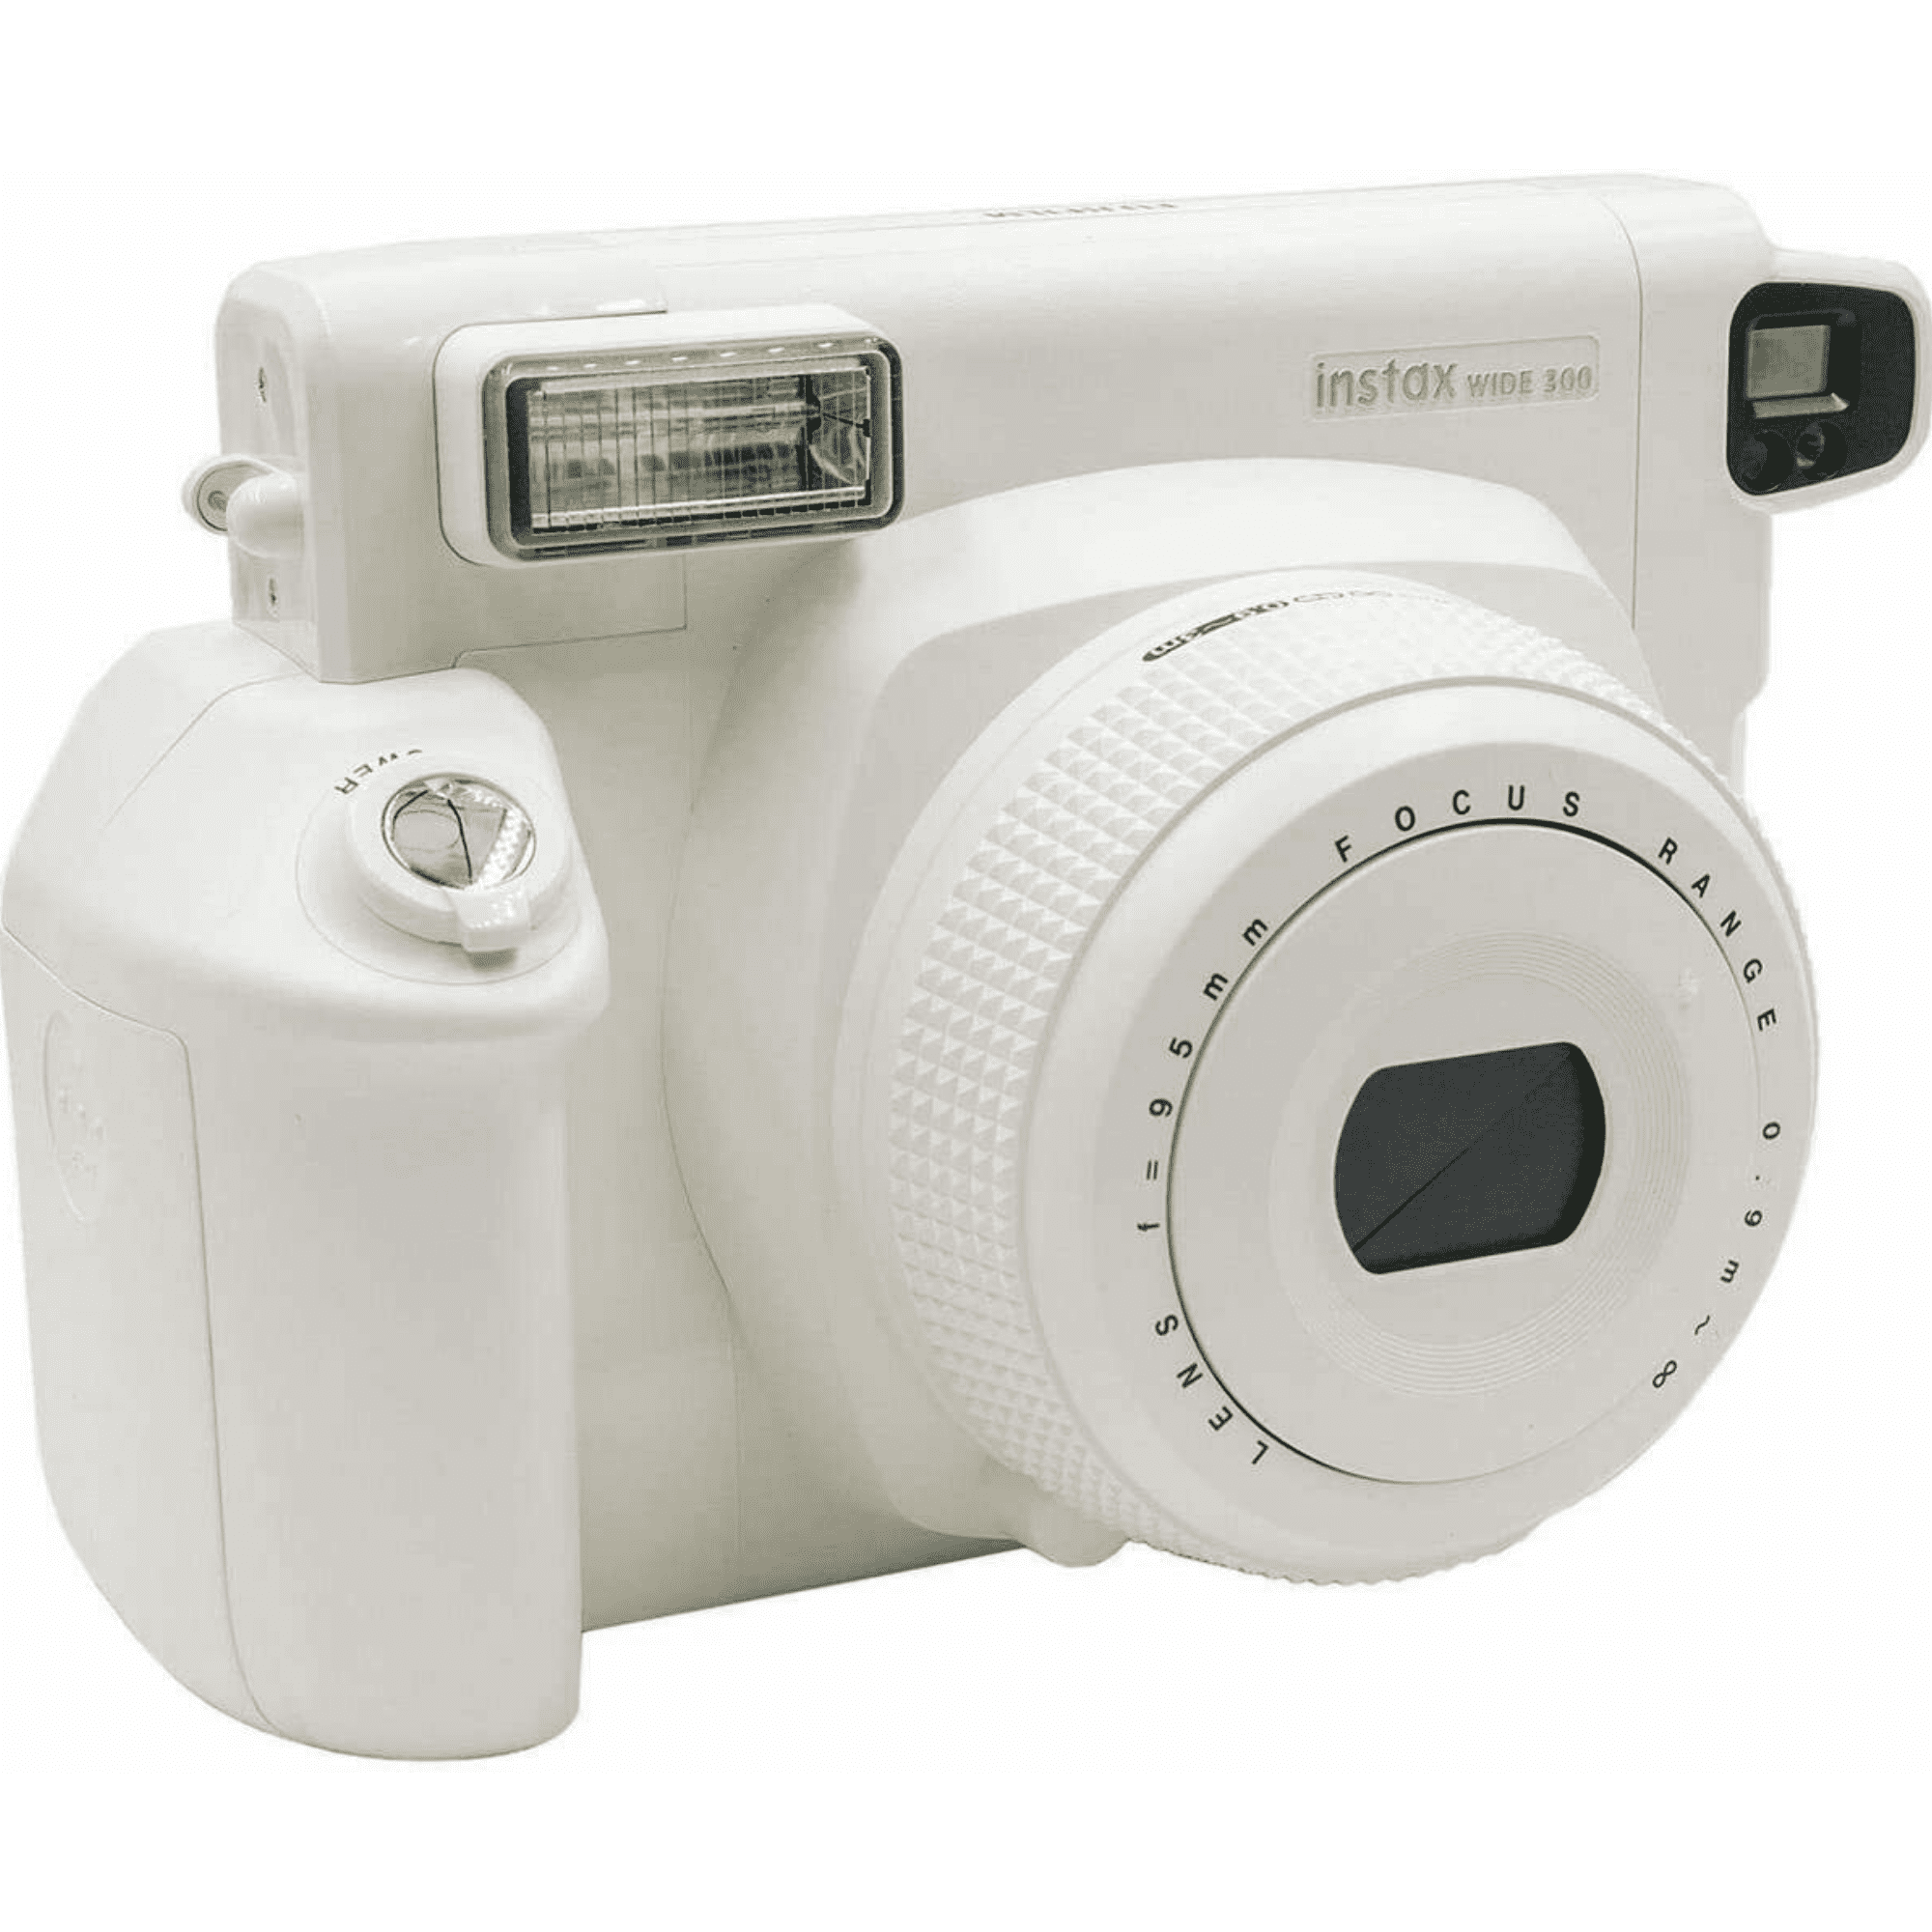 Fujifilm INSTAX Wide 300 Instant Film Camera, White - Walmart.com